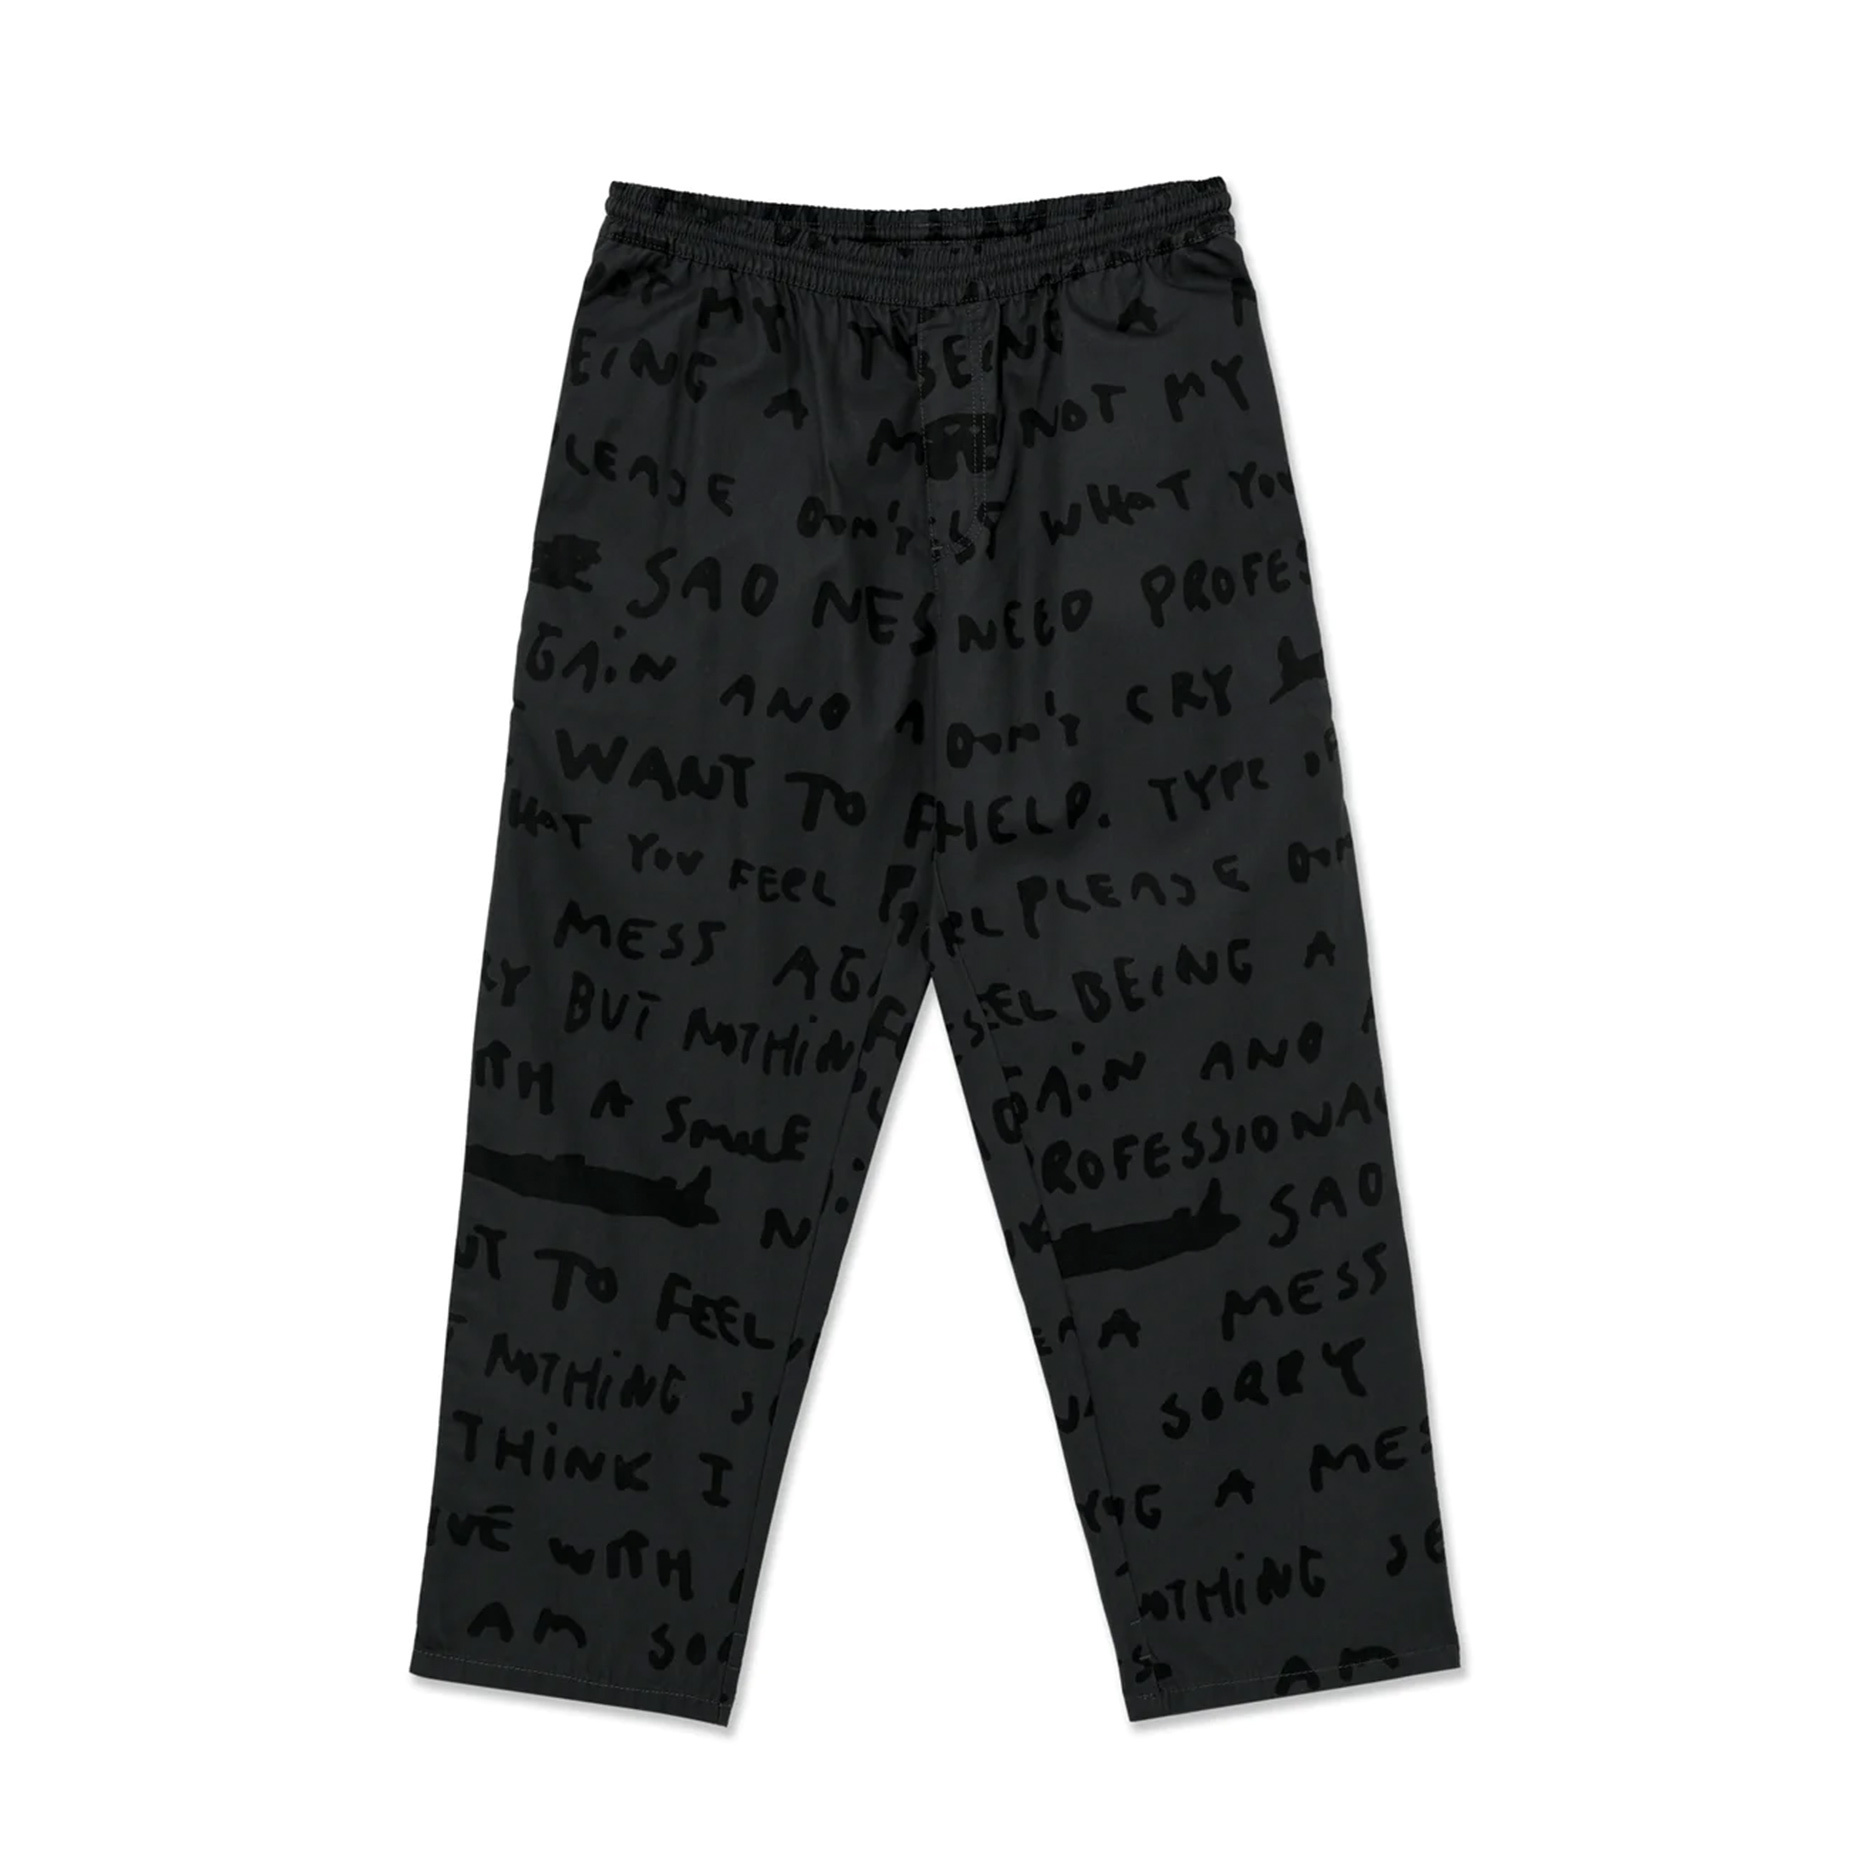 Polar Sad Notes Surf Pants - Graphite | BOARDWORLD Store